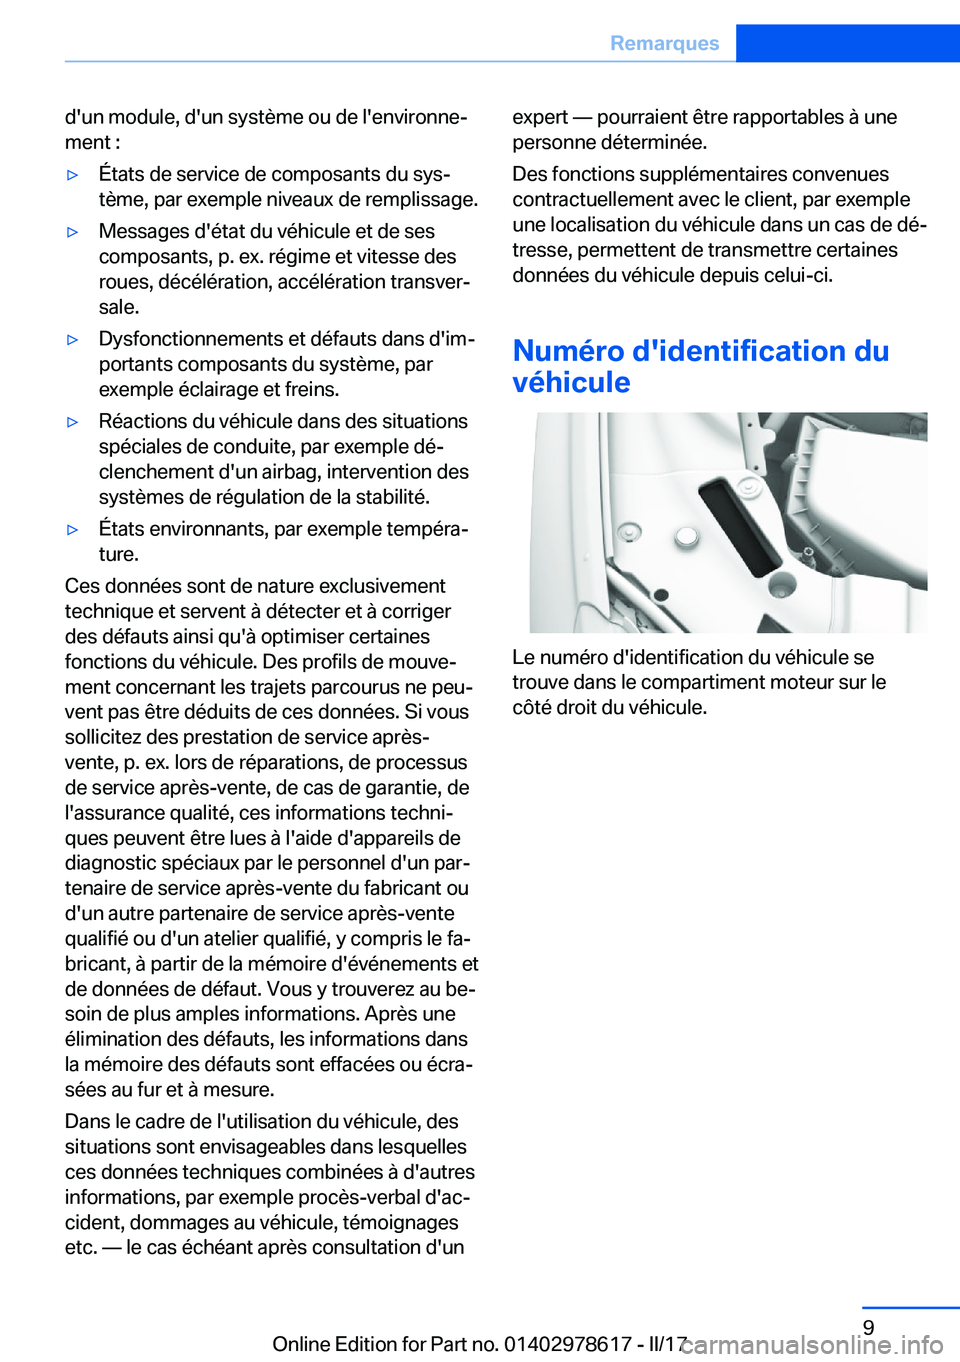 BMW 7 SERIES 2018  Notices Demploi (in French) �d�'�u�n� �m�o�d�u�l�e�,� �d�'�u�n� �s�y�s�t�è�m�e� �o�u� �d�e� �l�'�e�n�v�i�r�o�n�n�ej�m�e�n�t� �:'y�É�t�a�t�s� �d�e� �s�e�r�v�i�c�e� �d�e� �c�o�m�p�o�s�a�n�t�s� �d�u� �s�y�sj
�t�